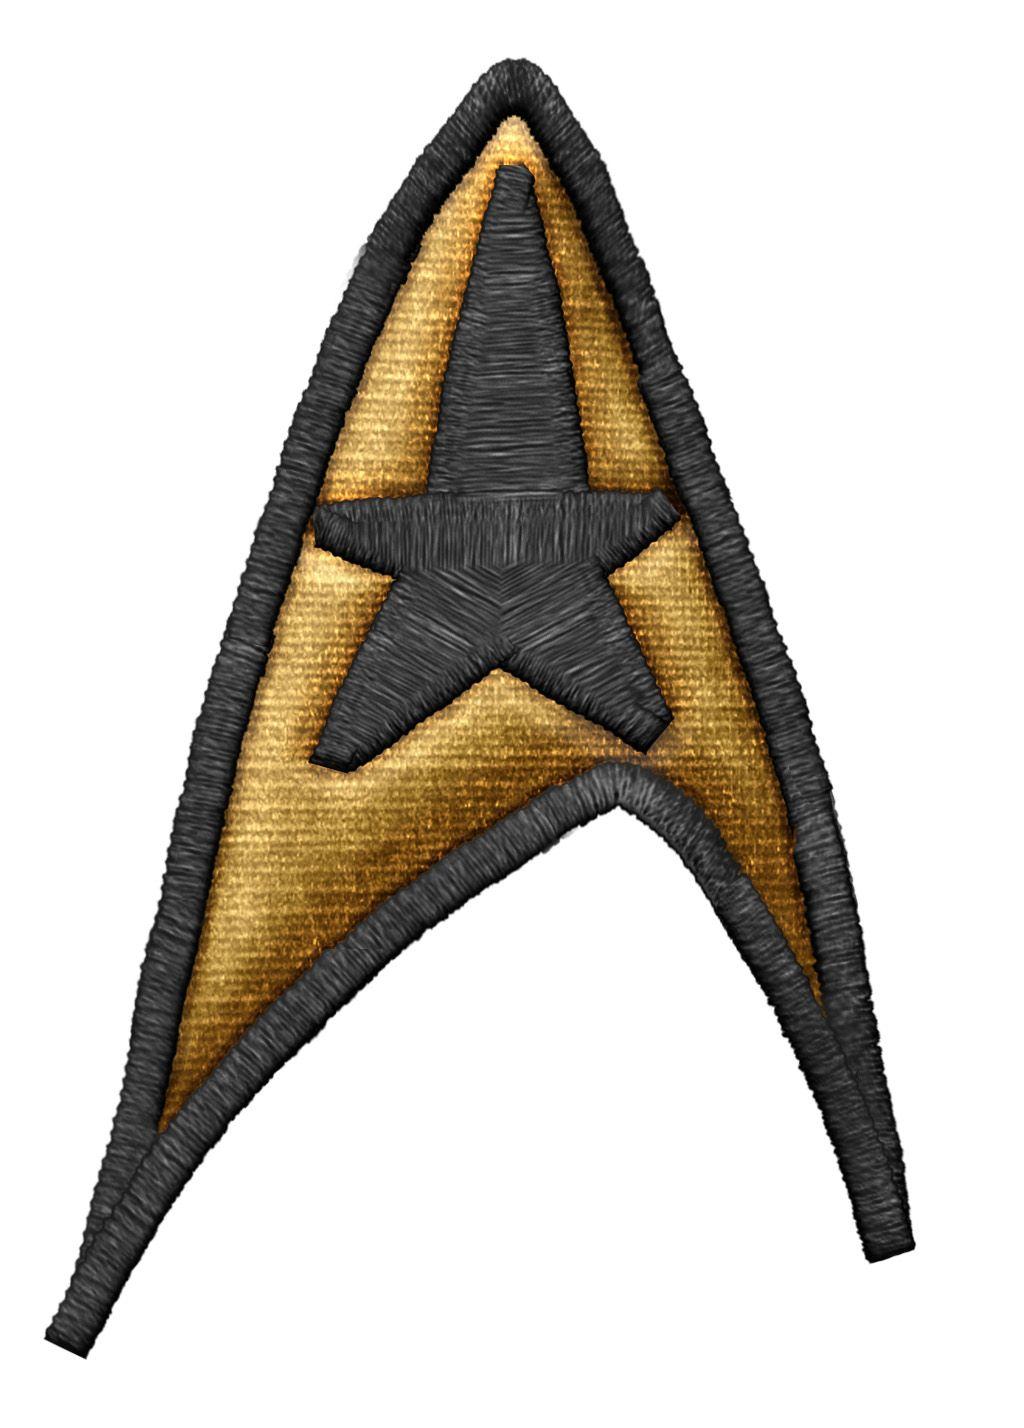 Red Star Trek Logo - Star Trek TOS -Iron on Insignia (Science, Command, Engineering ...